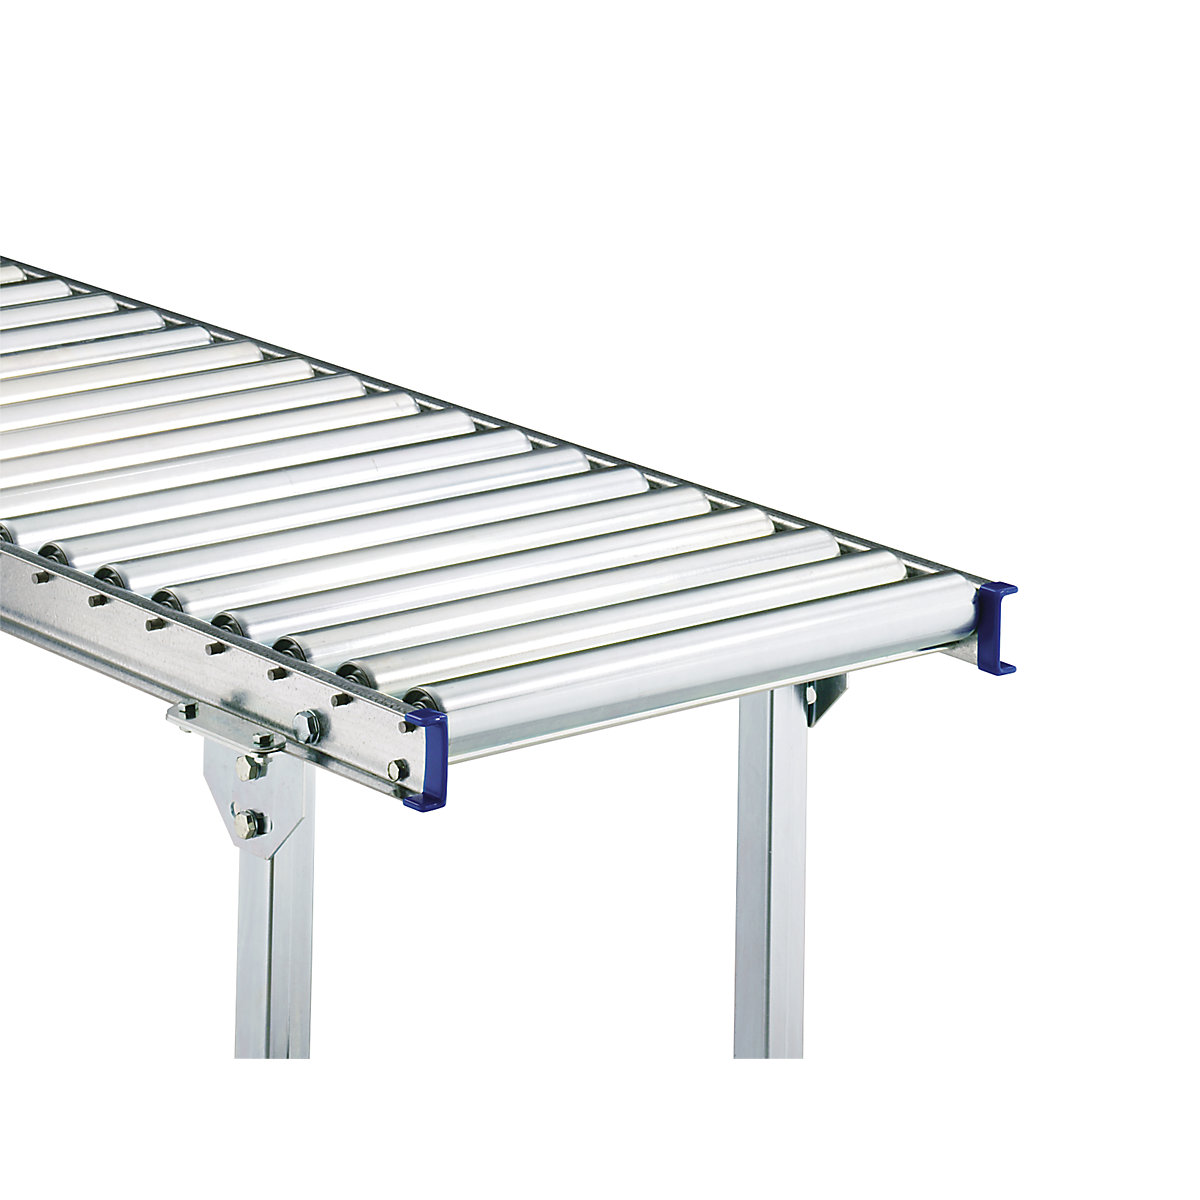 Gura – Light duty roller conveyor, steel frame with zinc plated steel rollers